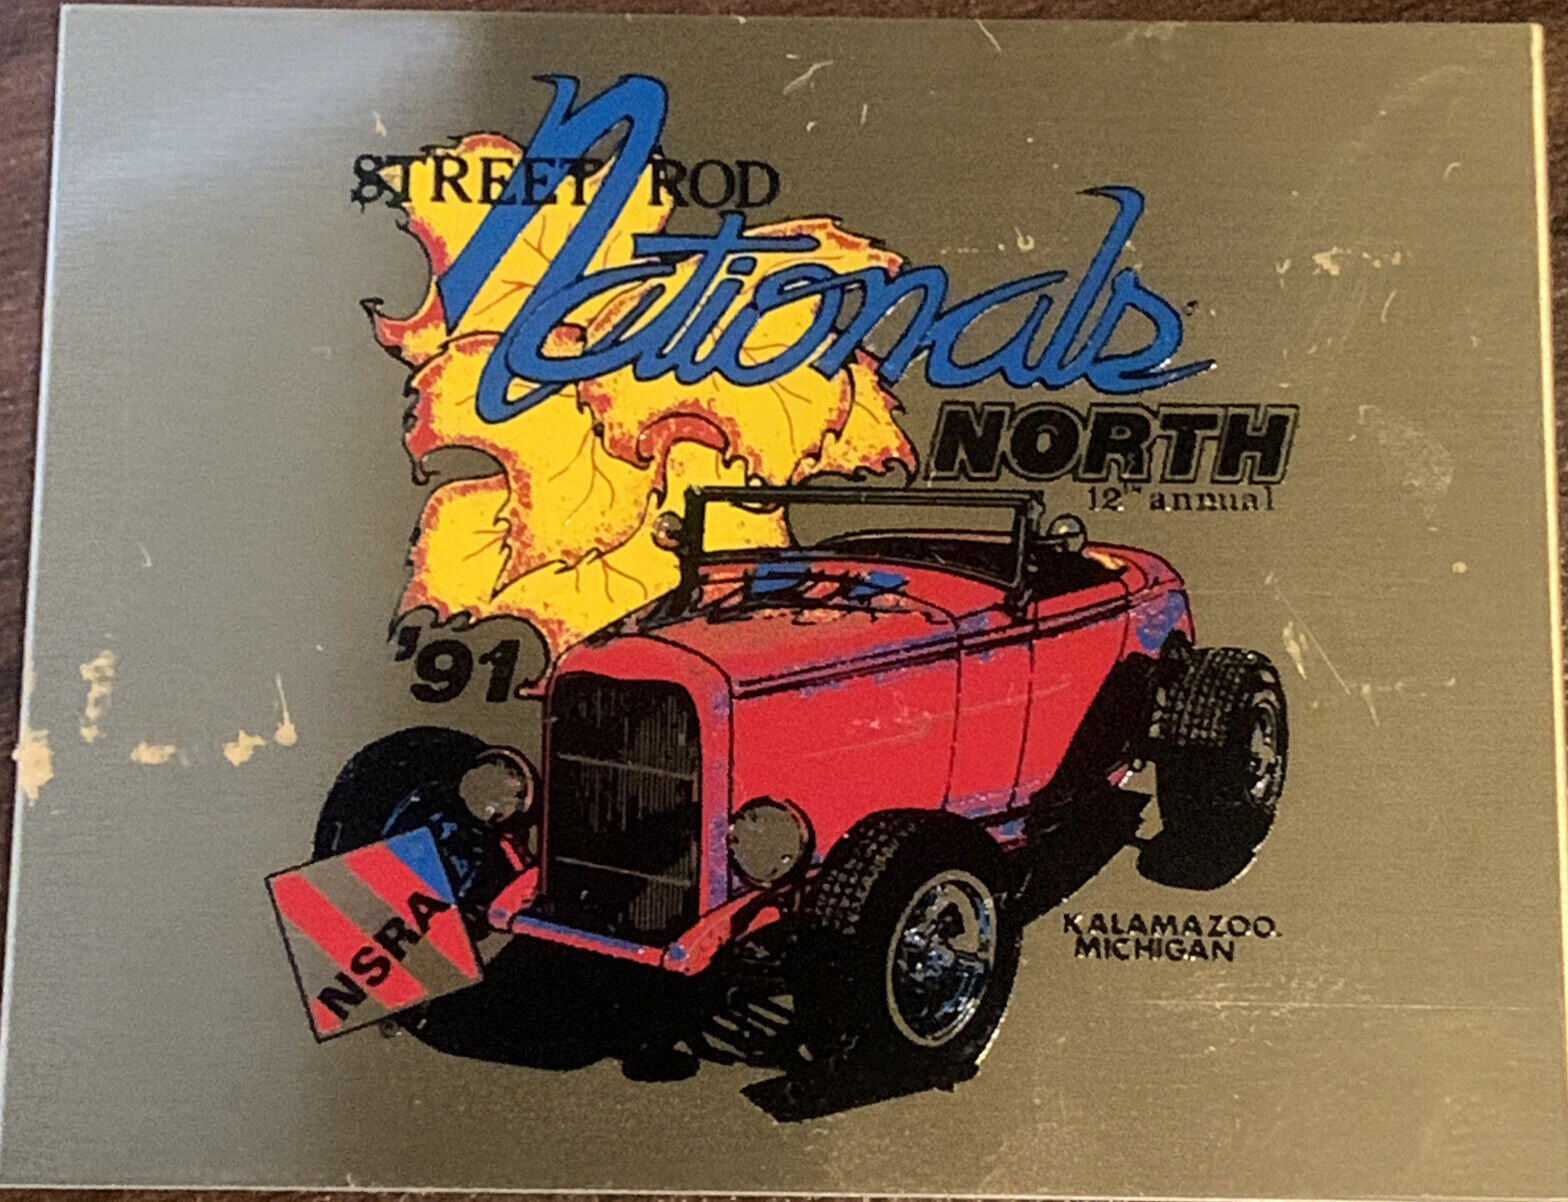 NSRA 1991 National Street Rod Association Nationals North Kalamazoo Dash Plaque